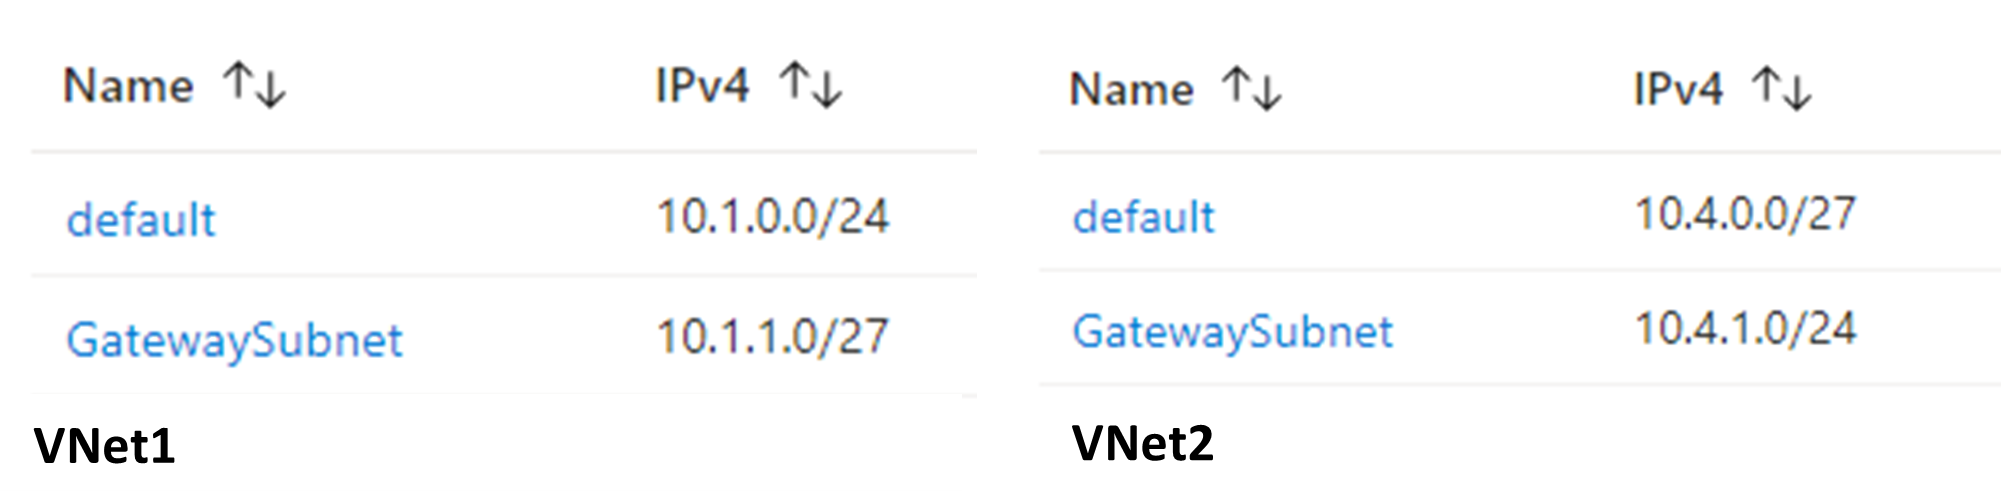 Screenshot showing the Gateway subnet address.